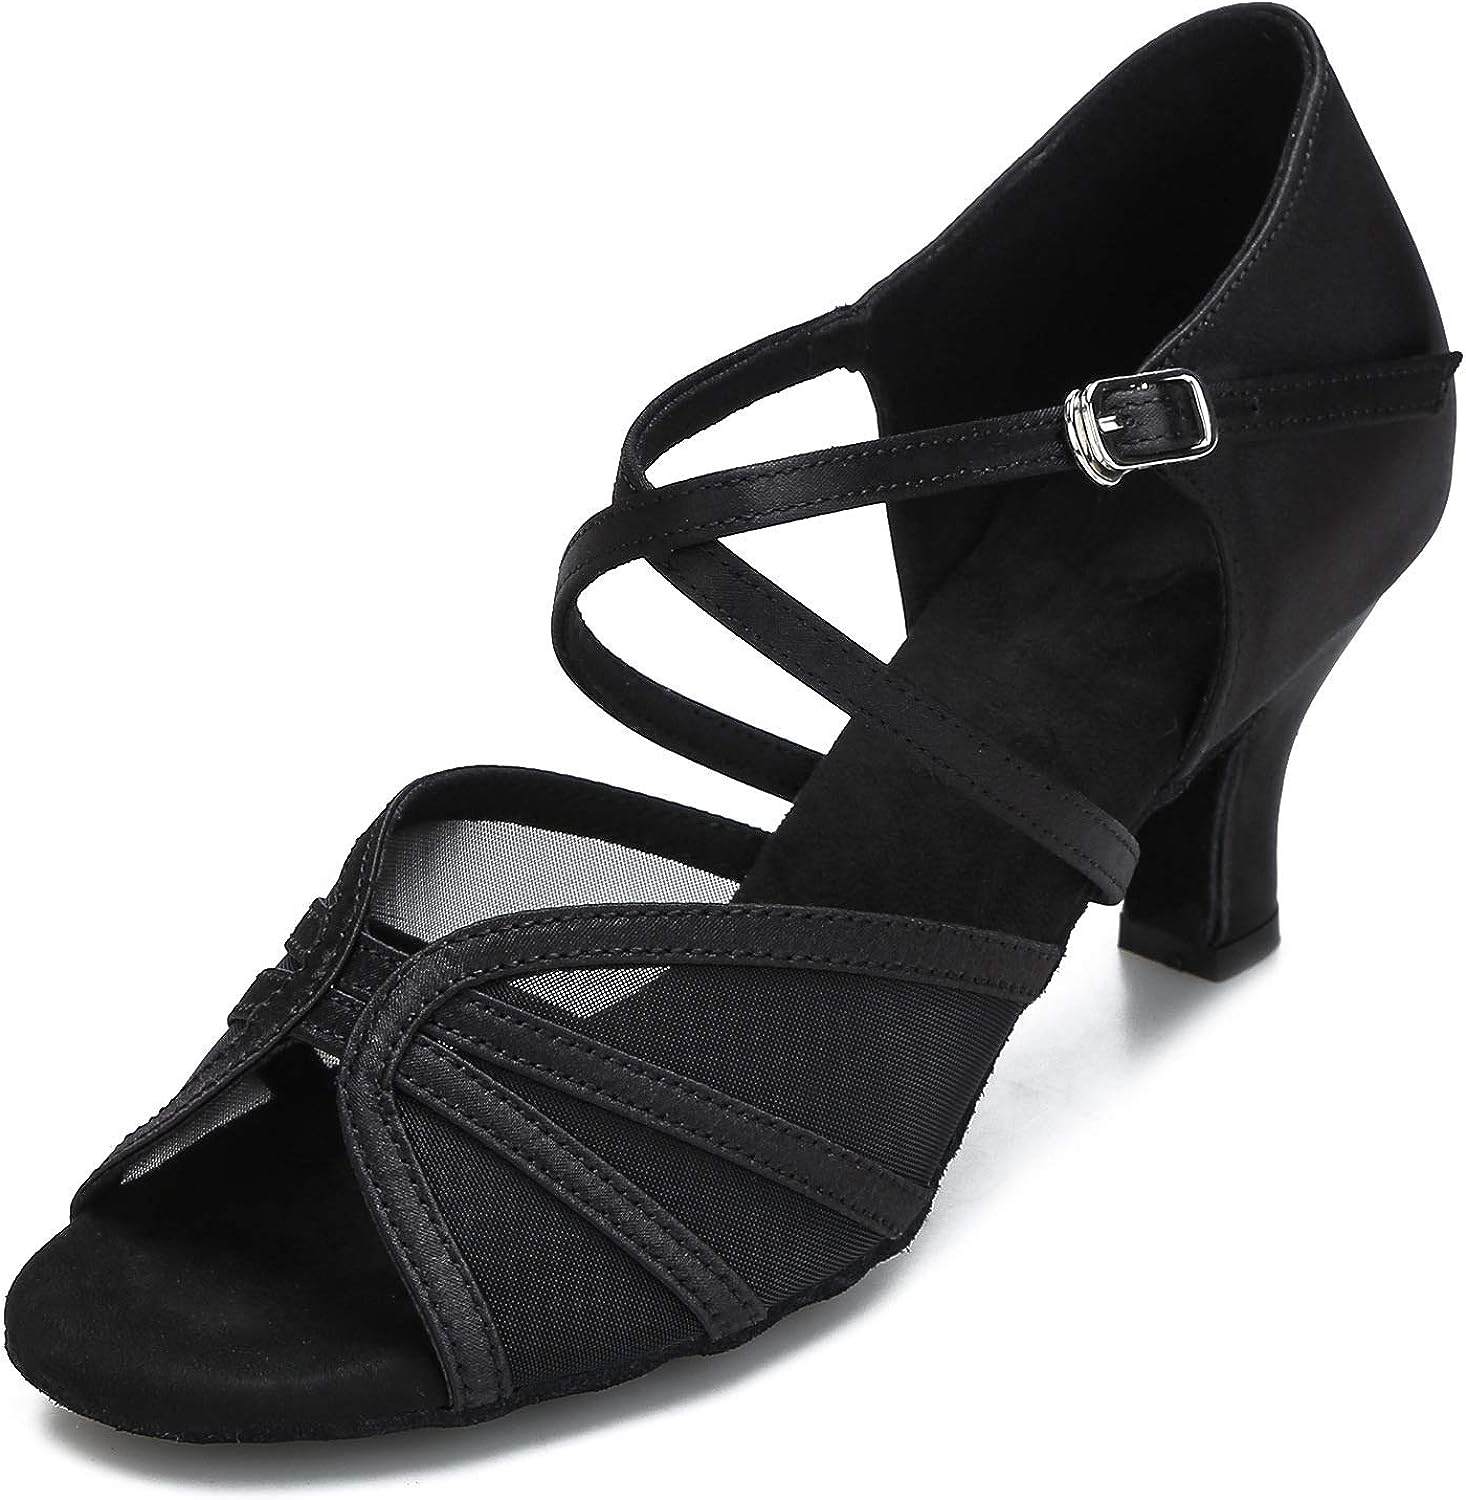 CLEECLI Women's Ballroom Dance Shoes Latin Salsa [...]